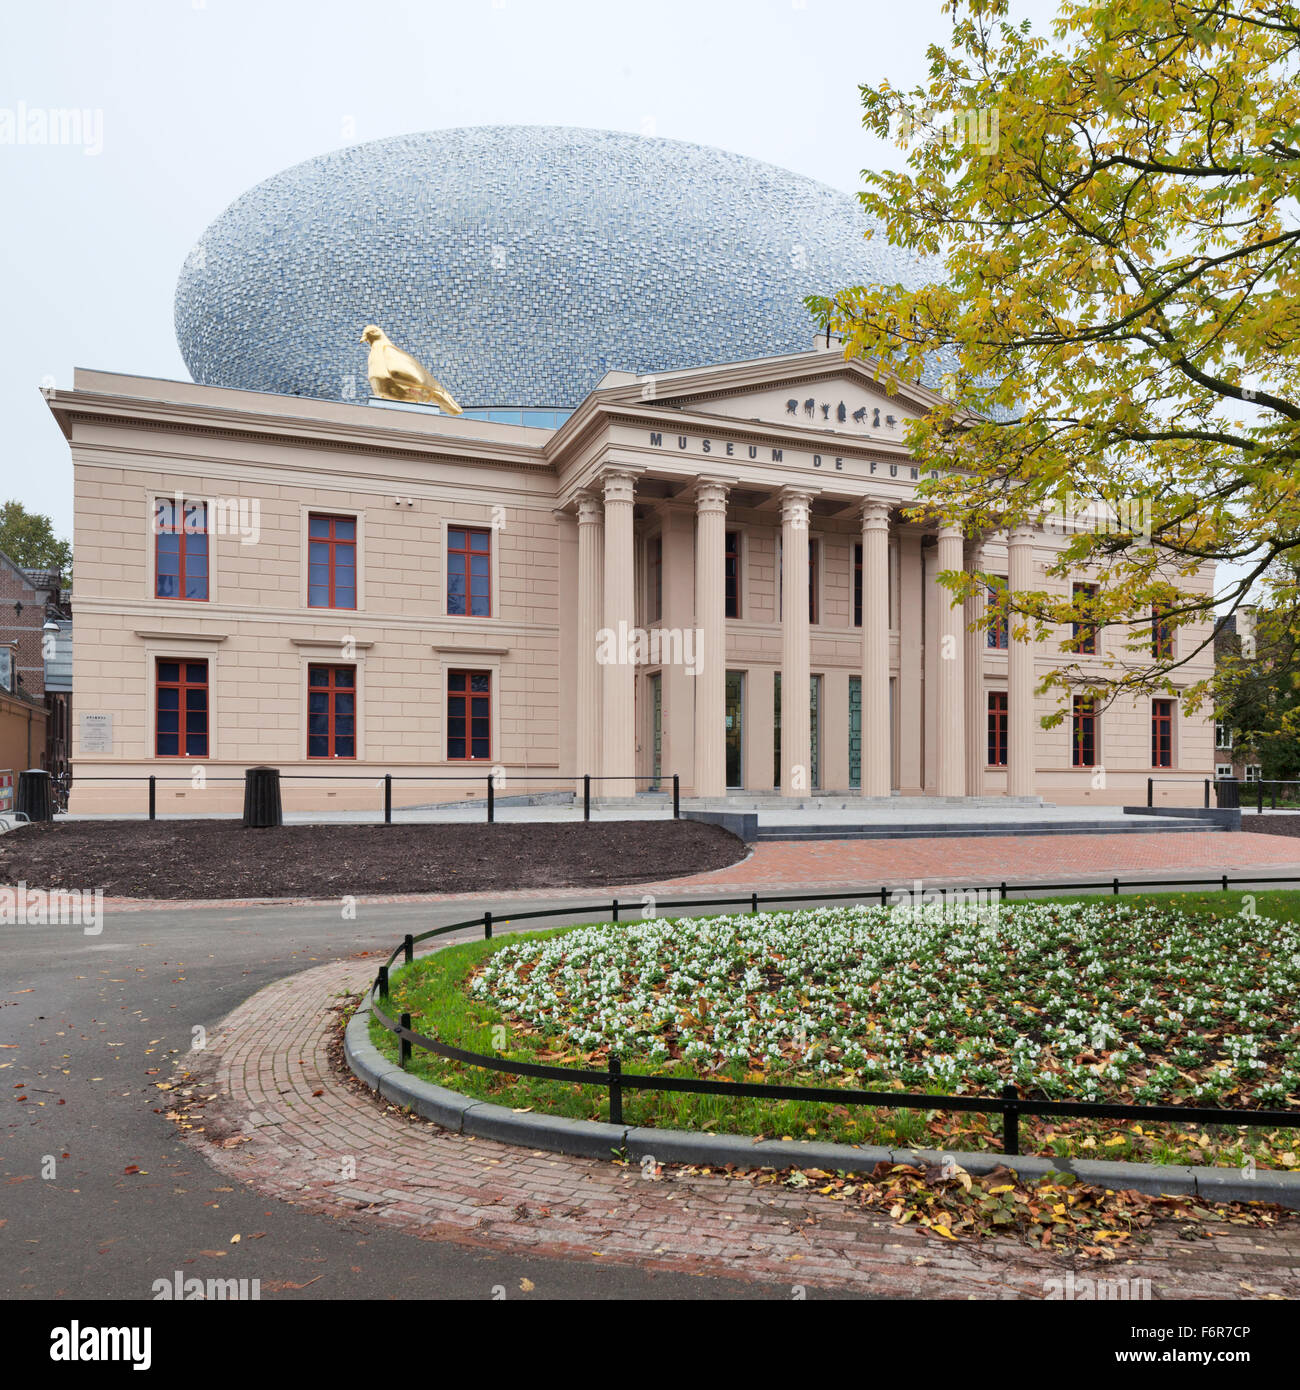 Museum de Fundatie (Foundation) in Zwolle, Niederlande Stockfoto